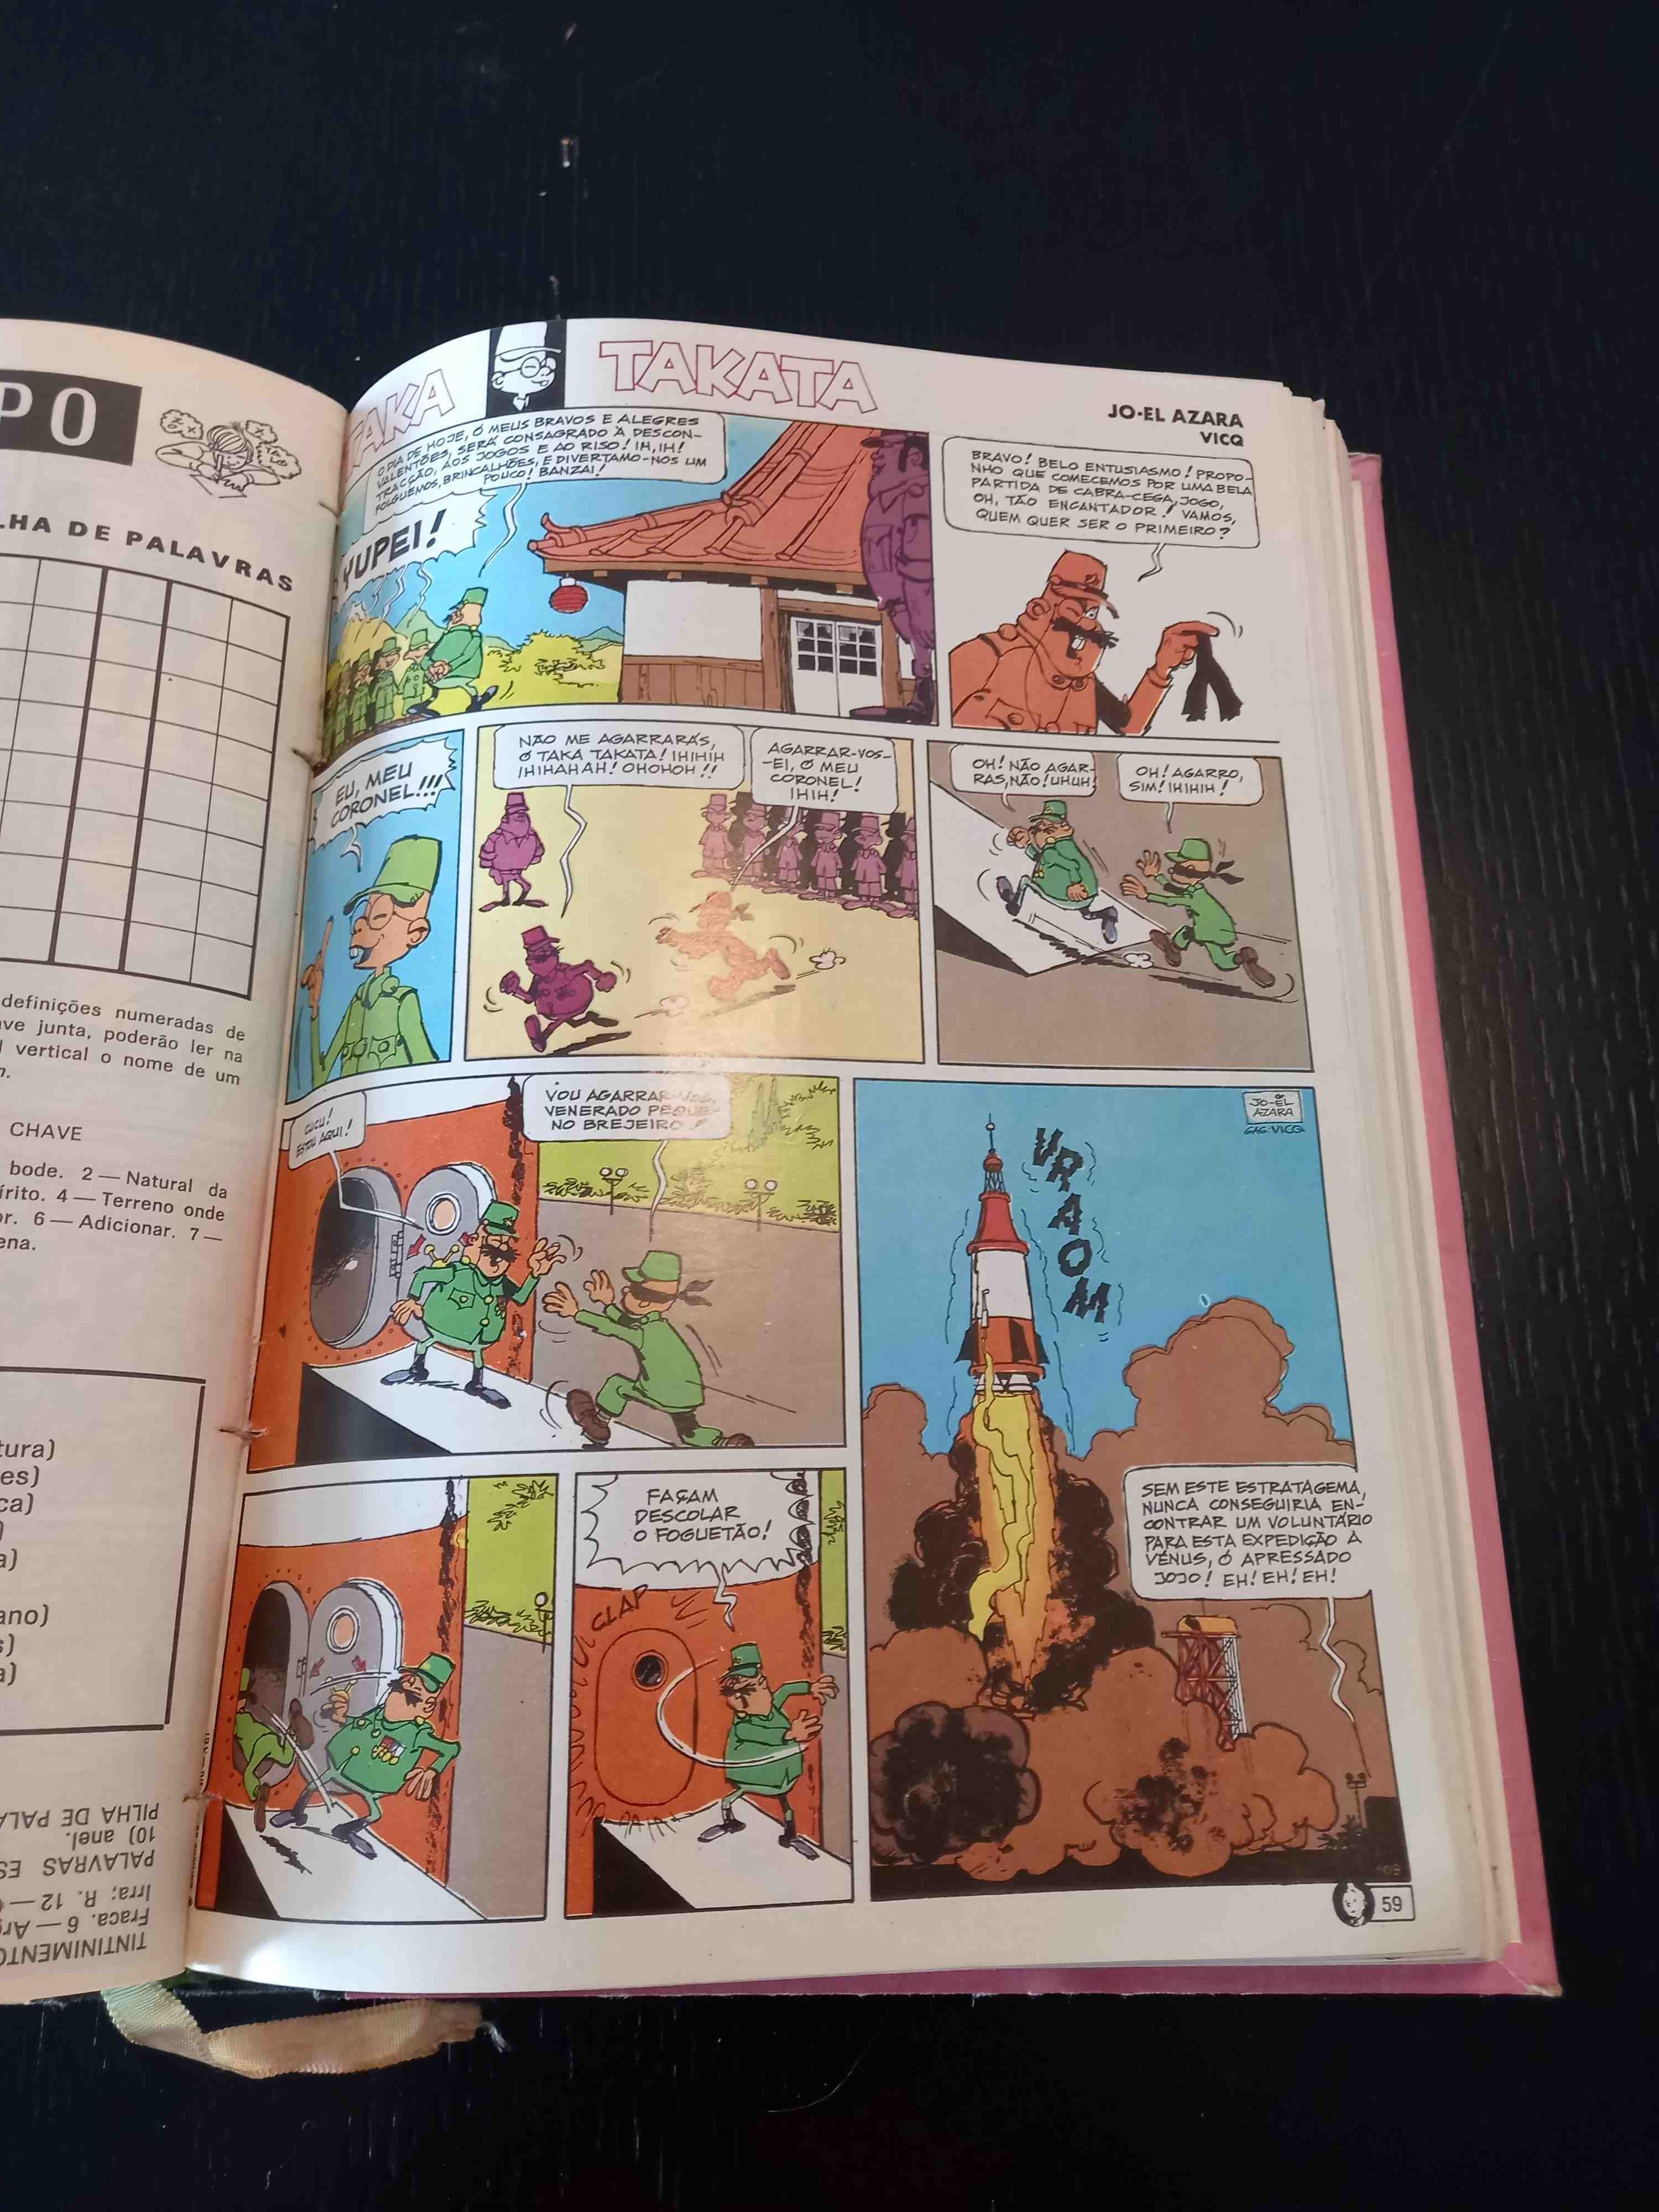 Tintin - Revistas em volumes encadernados - 18 - Ano 9 - 2º vol.